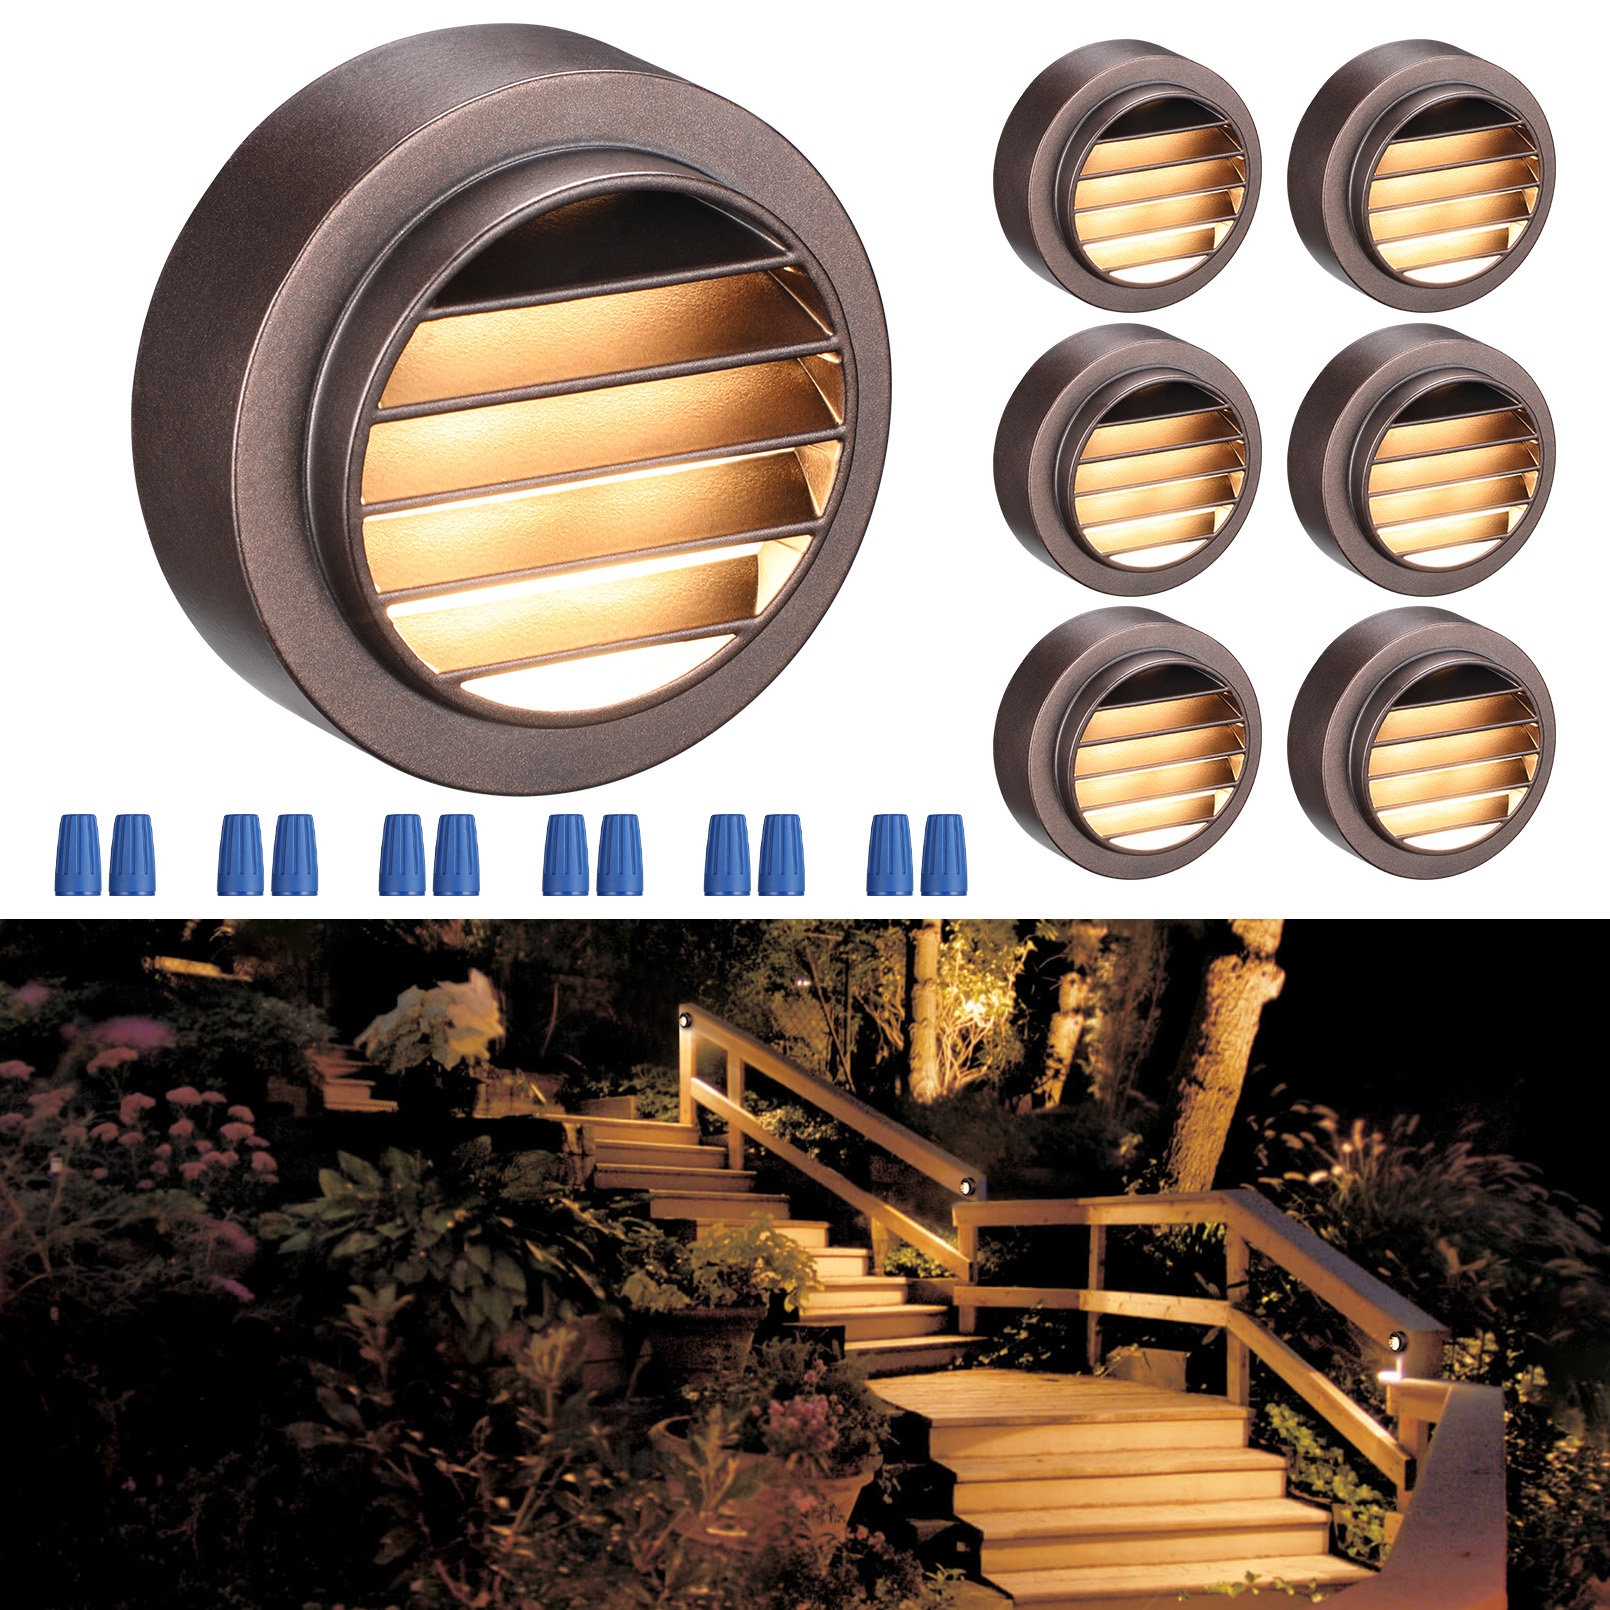 GKOLED Low Voltage LED Deck Lights, Landscape Step Stair Railing Light Fixture with 2W Integrated LED Chips, Die-cast Aluminum 12V AC DC Accent Lighti - 4